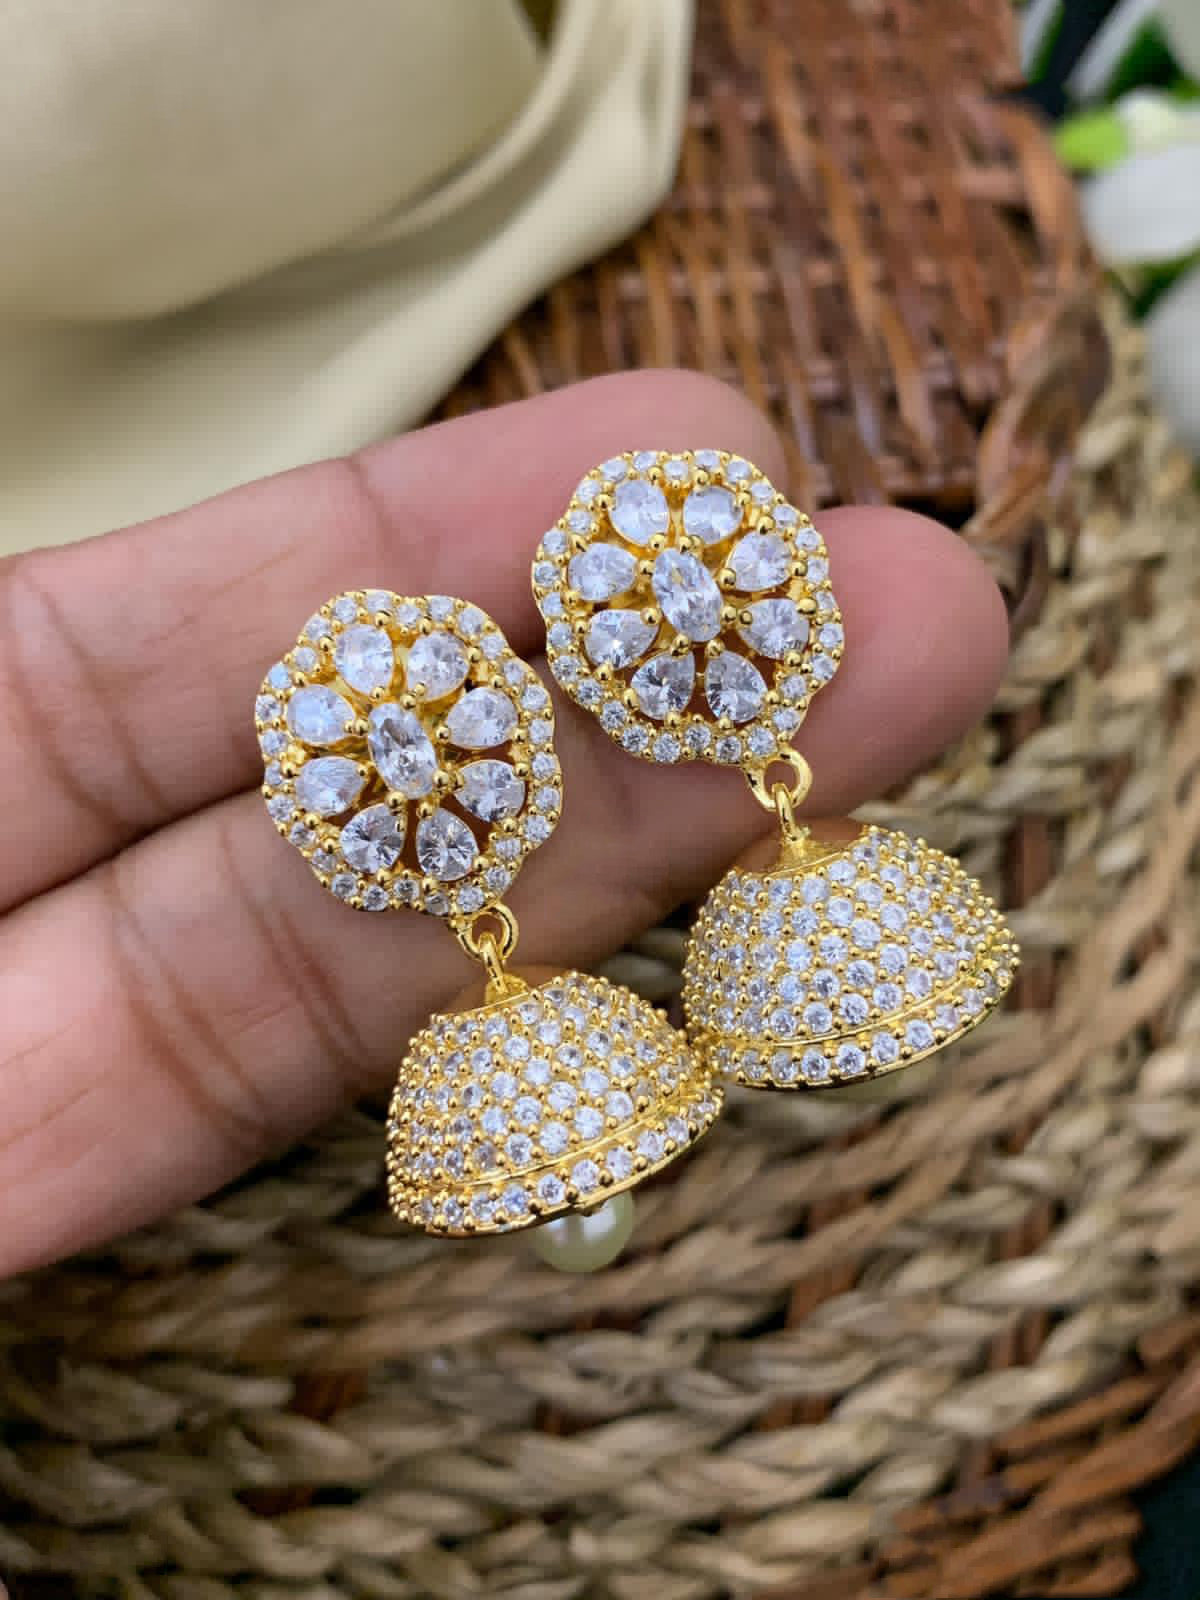 Latest Small AD Jhumka earrings gold Designs | American diamond Jhumka earrings | South Indian Jhumka designs in gold | Bollywood earrings